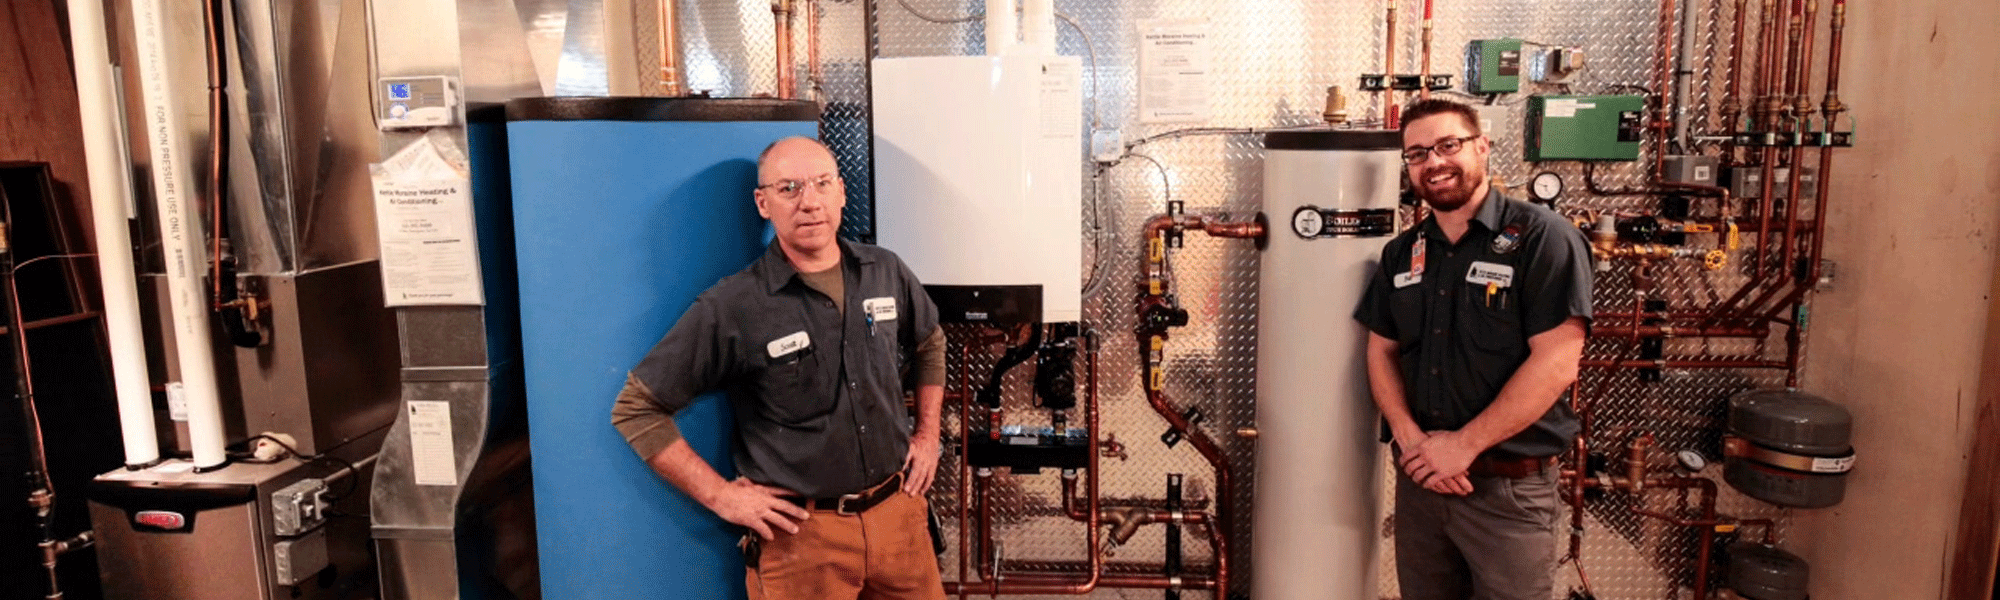 Kettle Moraine Heating Boiler Technicians